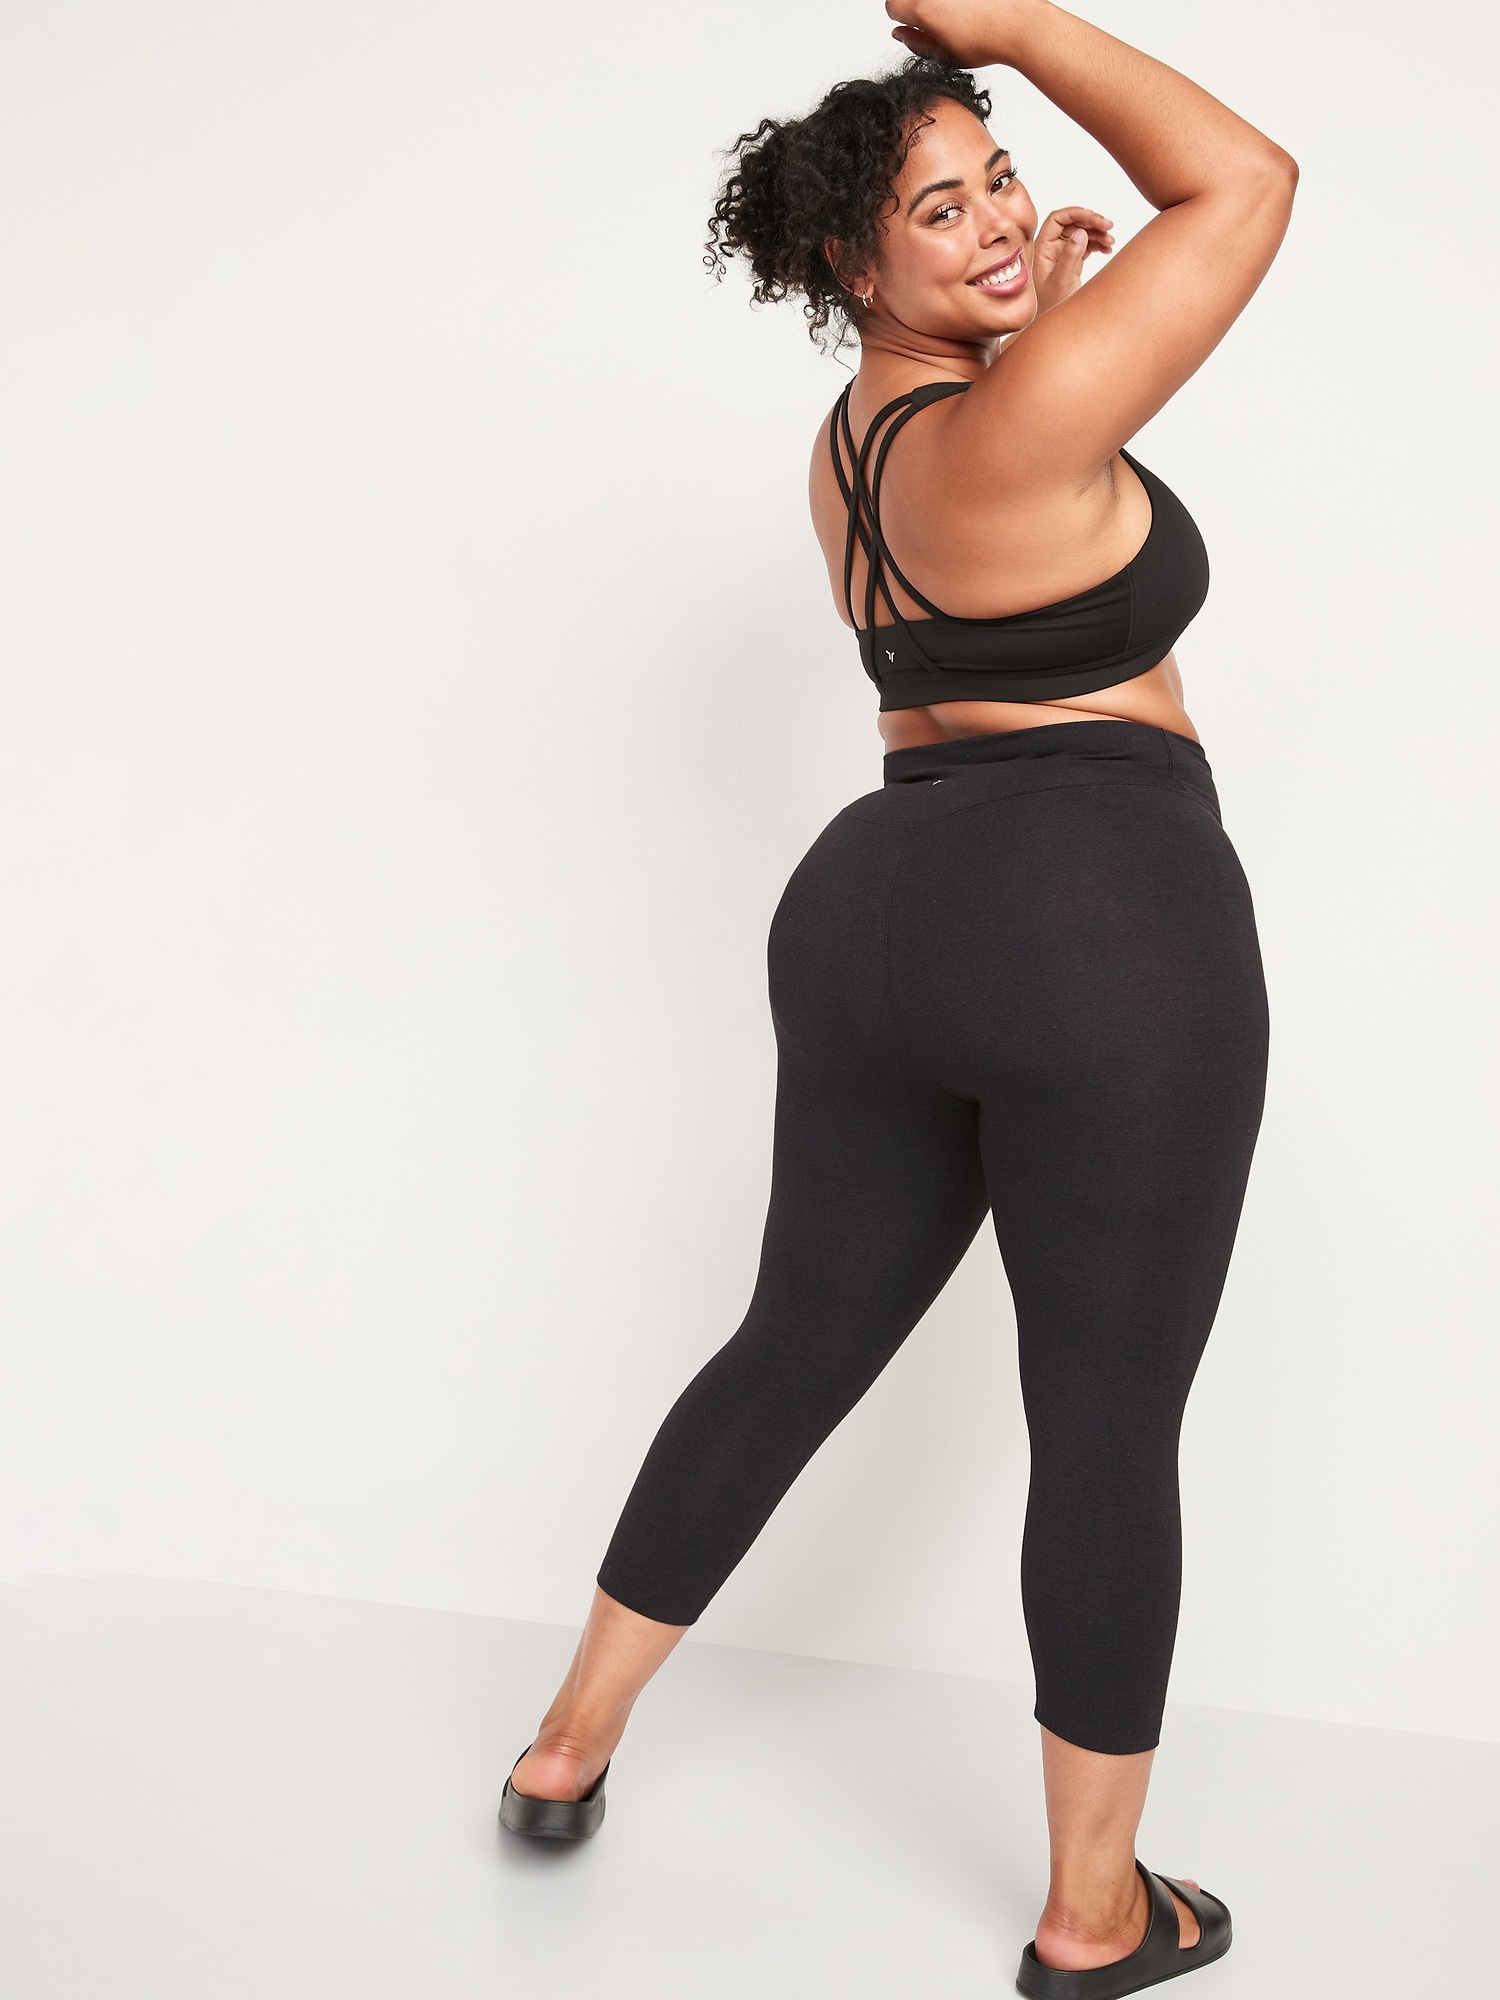 Tuff Athletics Women's Ultra Soft Higher Waist Yoga Pant (Black, X-Large)